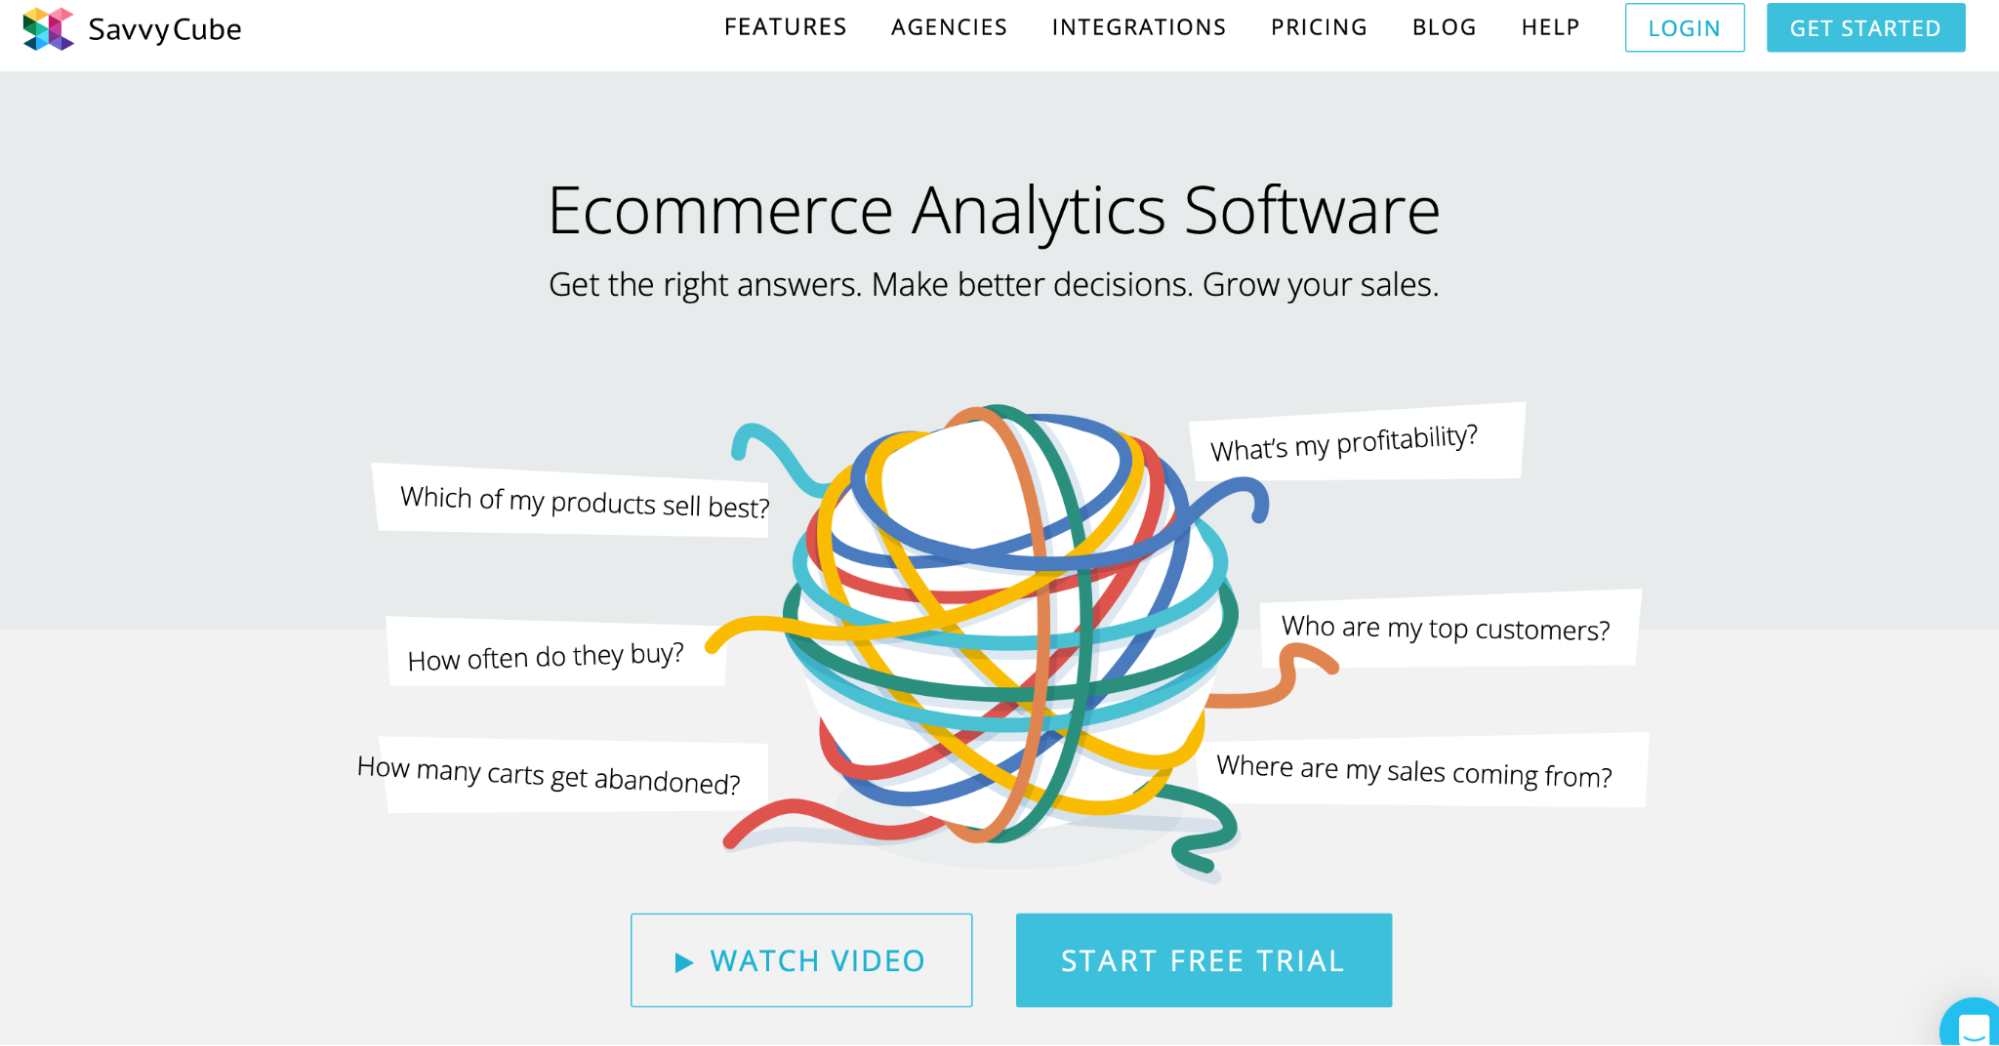 outils analytics ecommerce savvycube